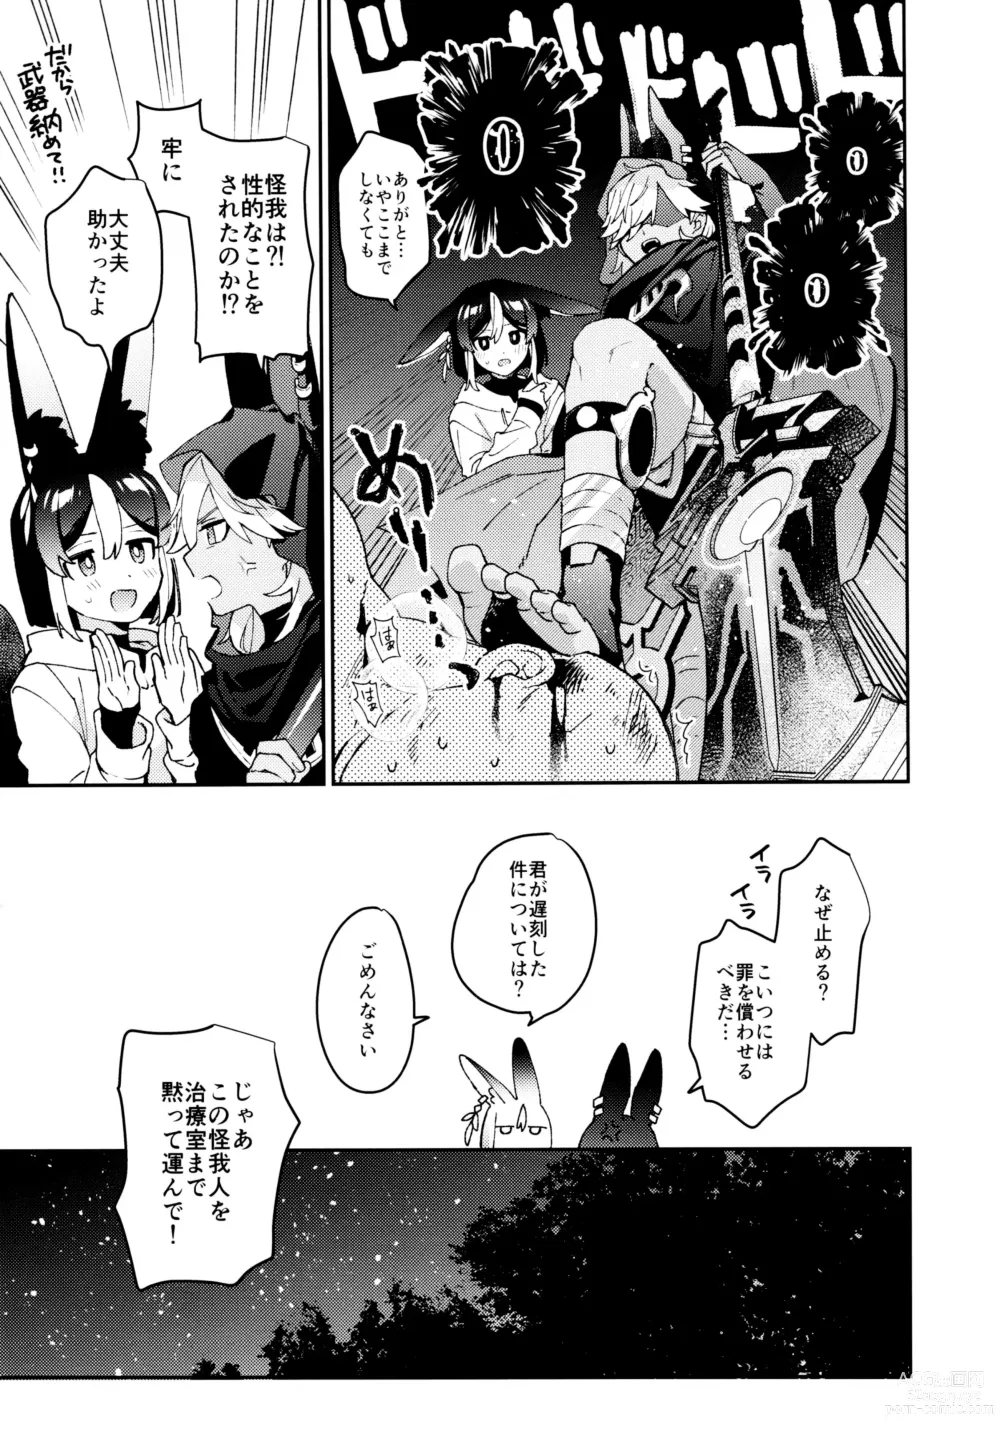 Page 7 of doujinshi ORE:CN